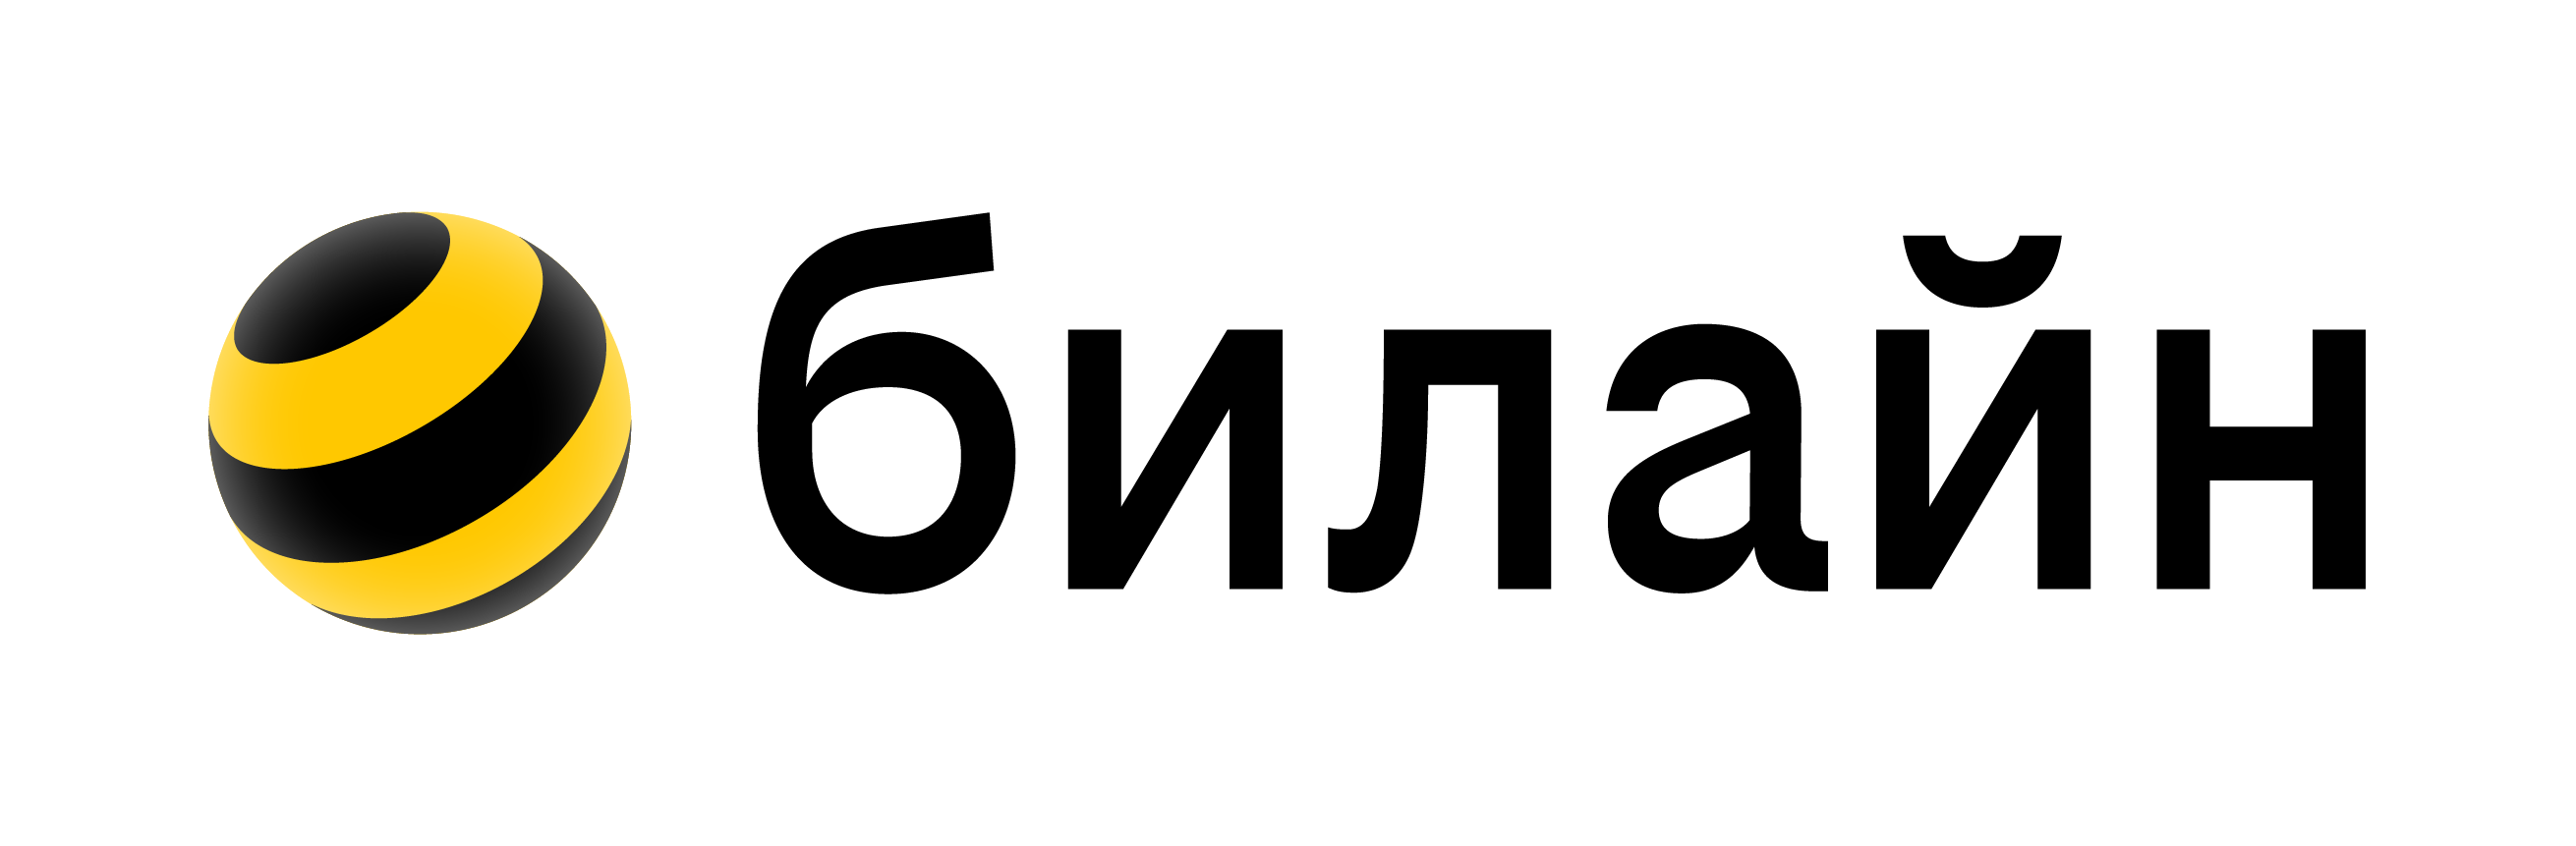 beeline logo